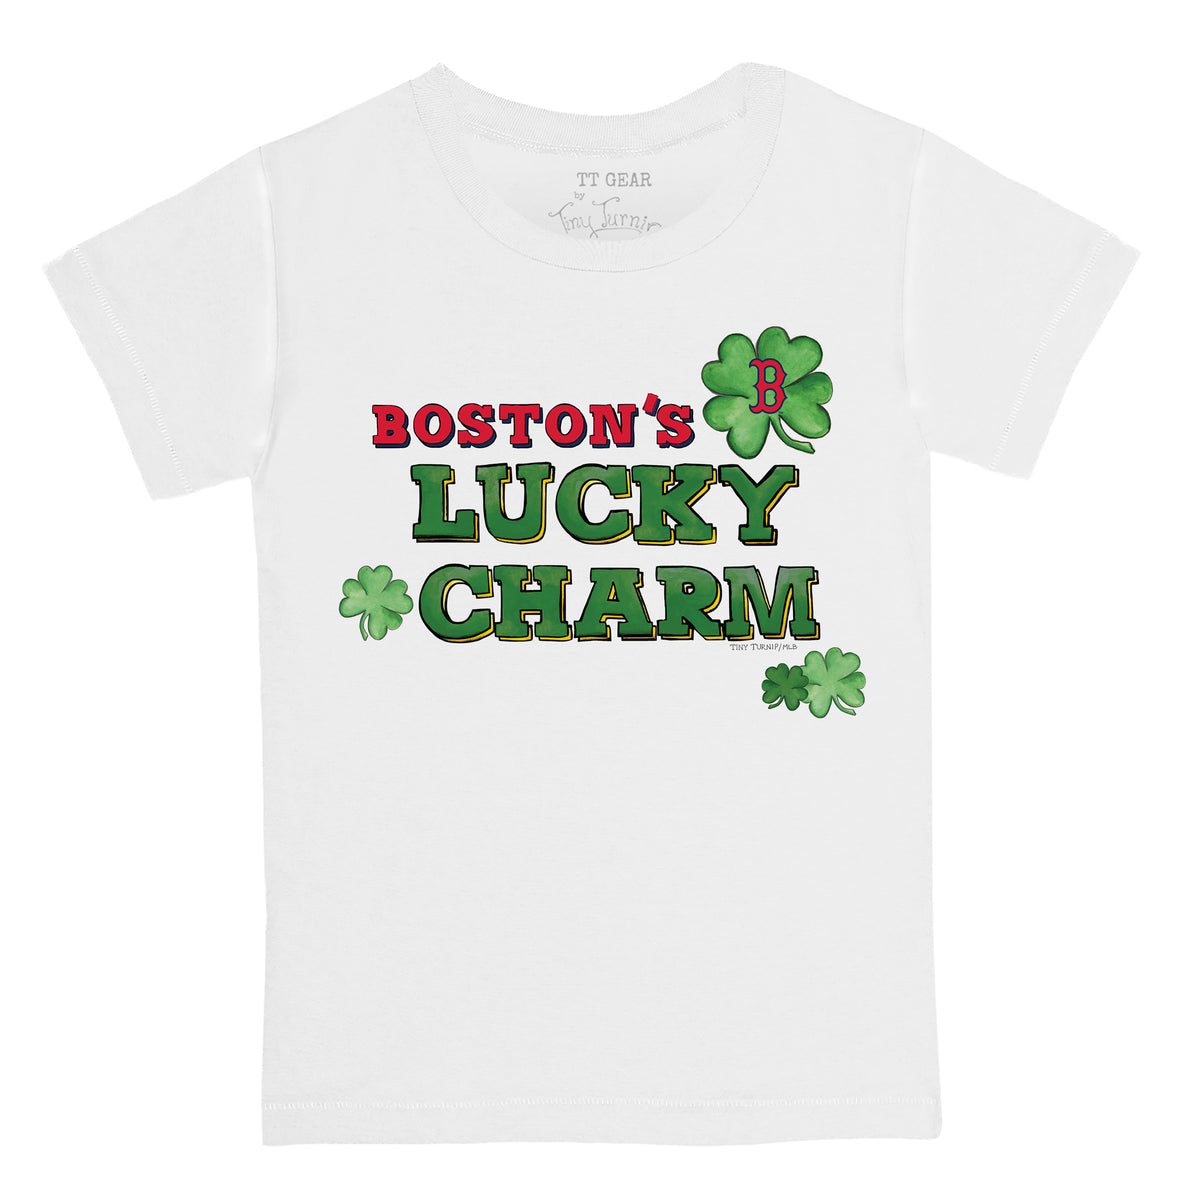 Boston Red Sox Lucky Charm Tee Shirt